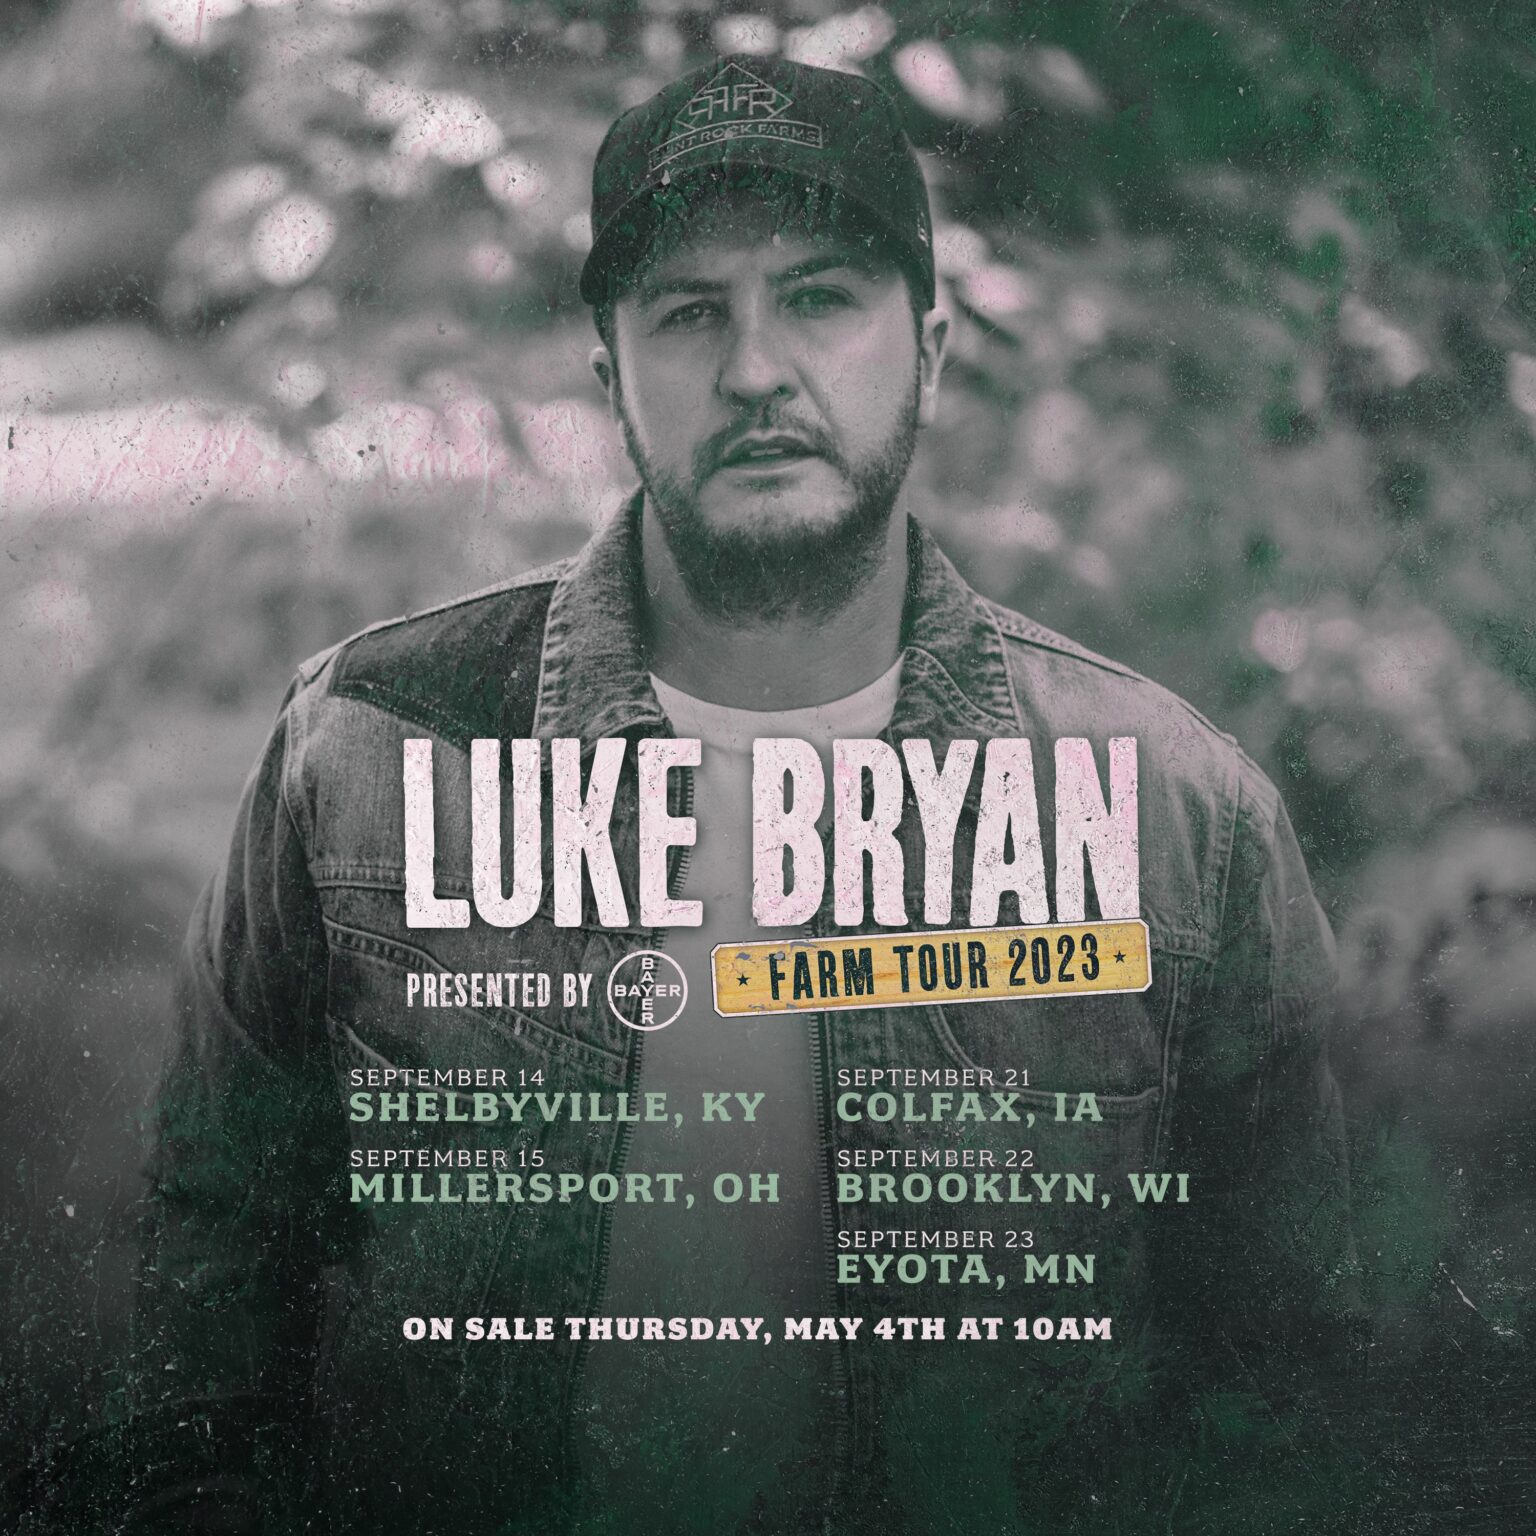 Luke Bryan Announces Farm Tour 2023 Cleveland Country Magazine